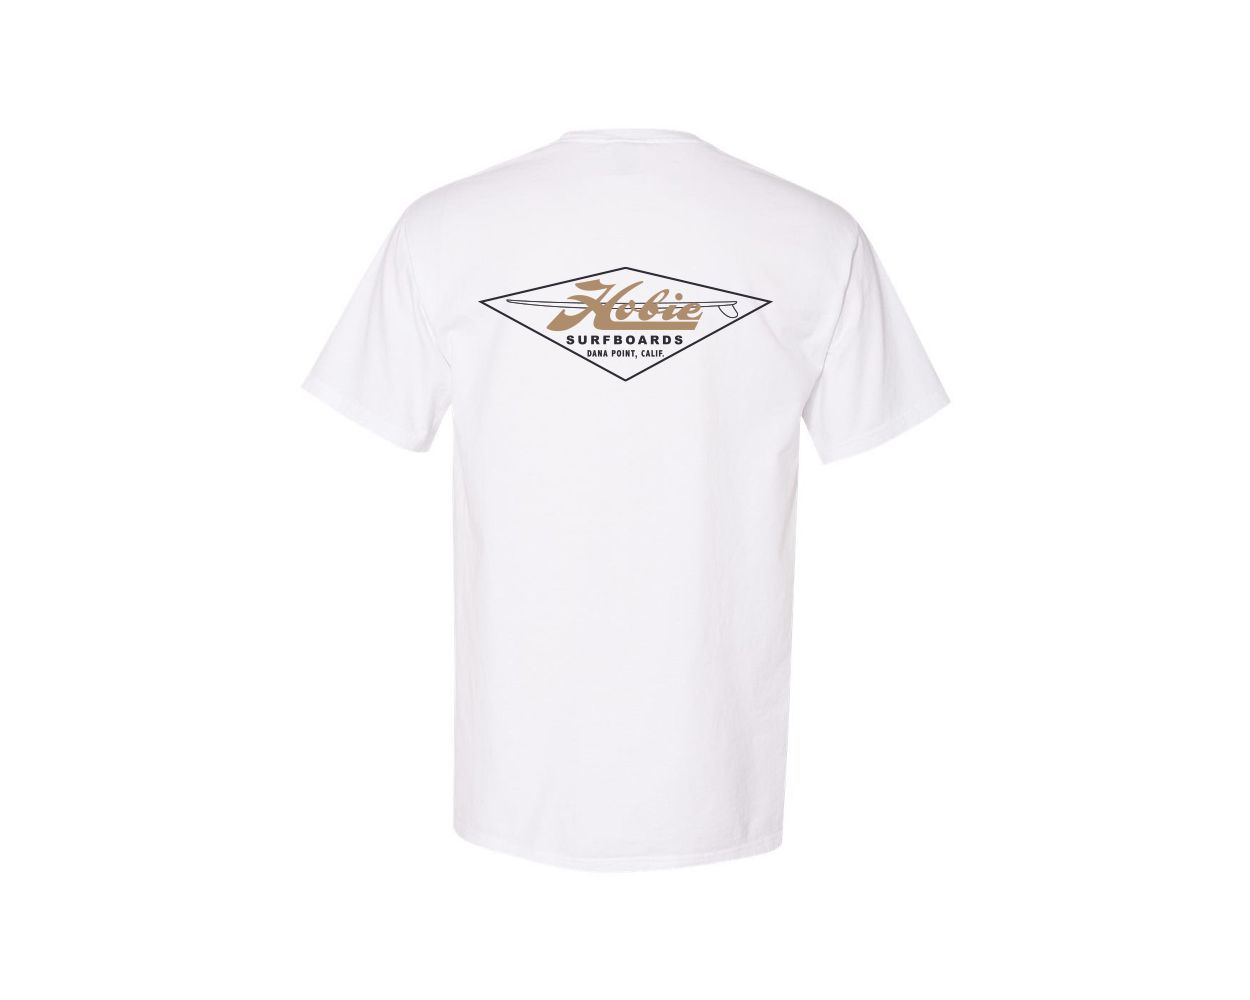 Dana Wharf Sportfishing T-Shirt Small